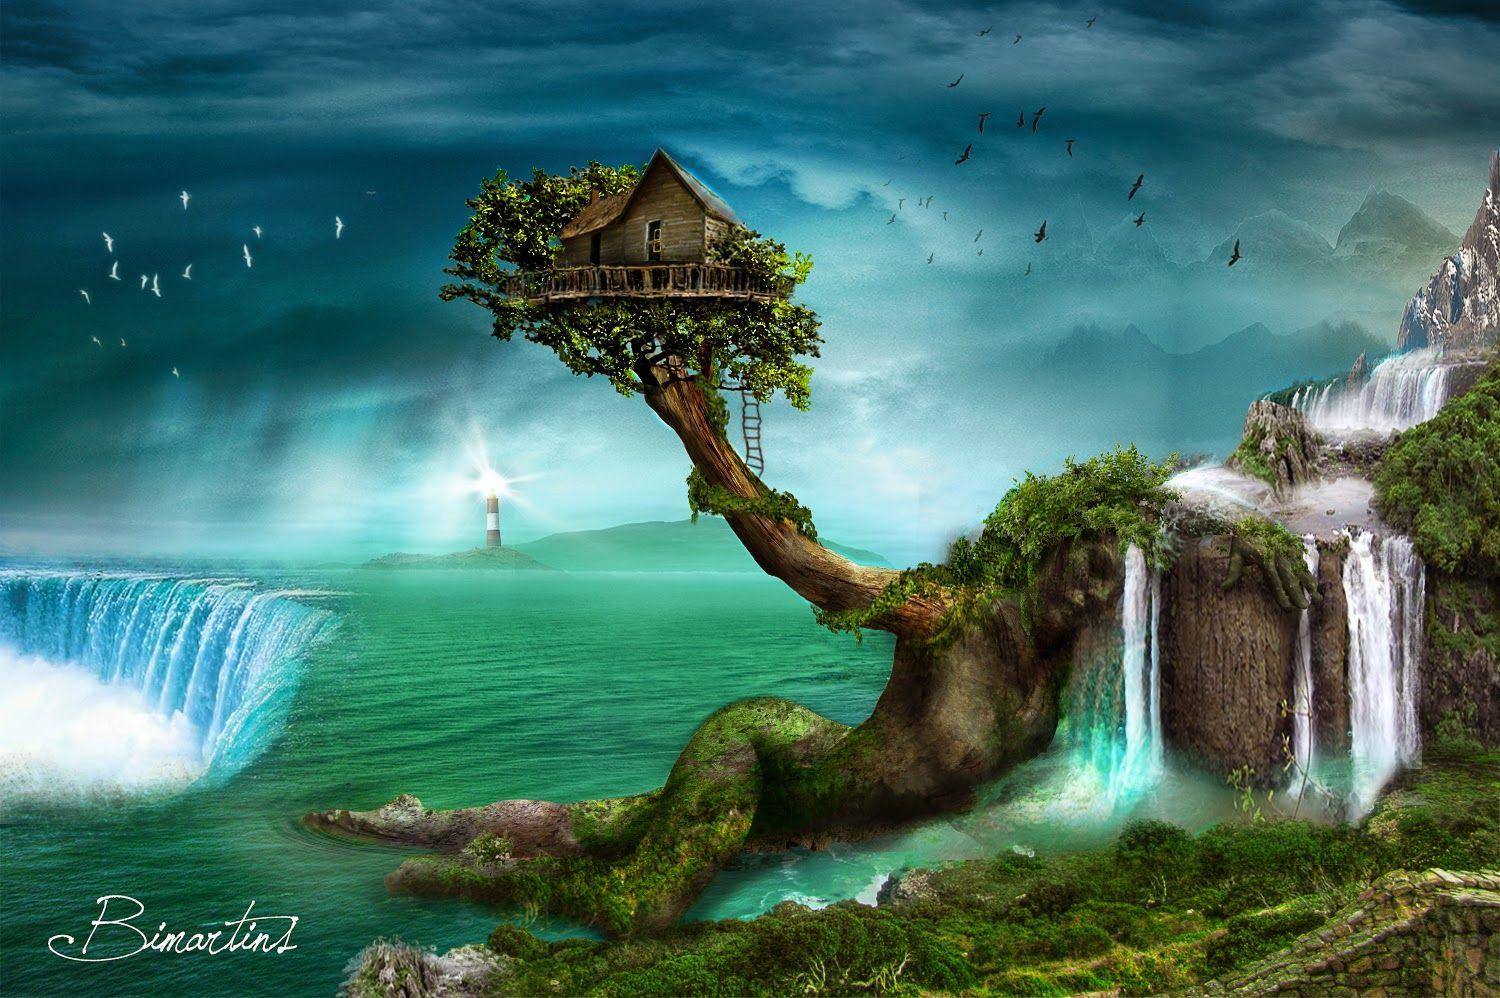 Beautiful Tree House fantasy fairy tale image picture HD photo